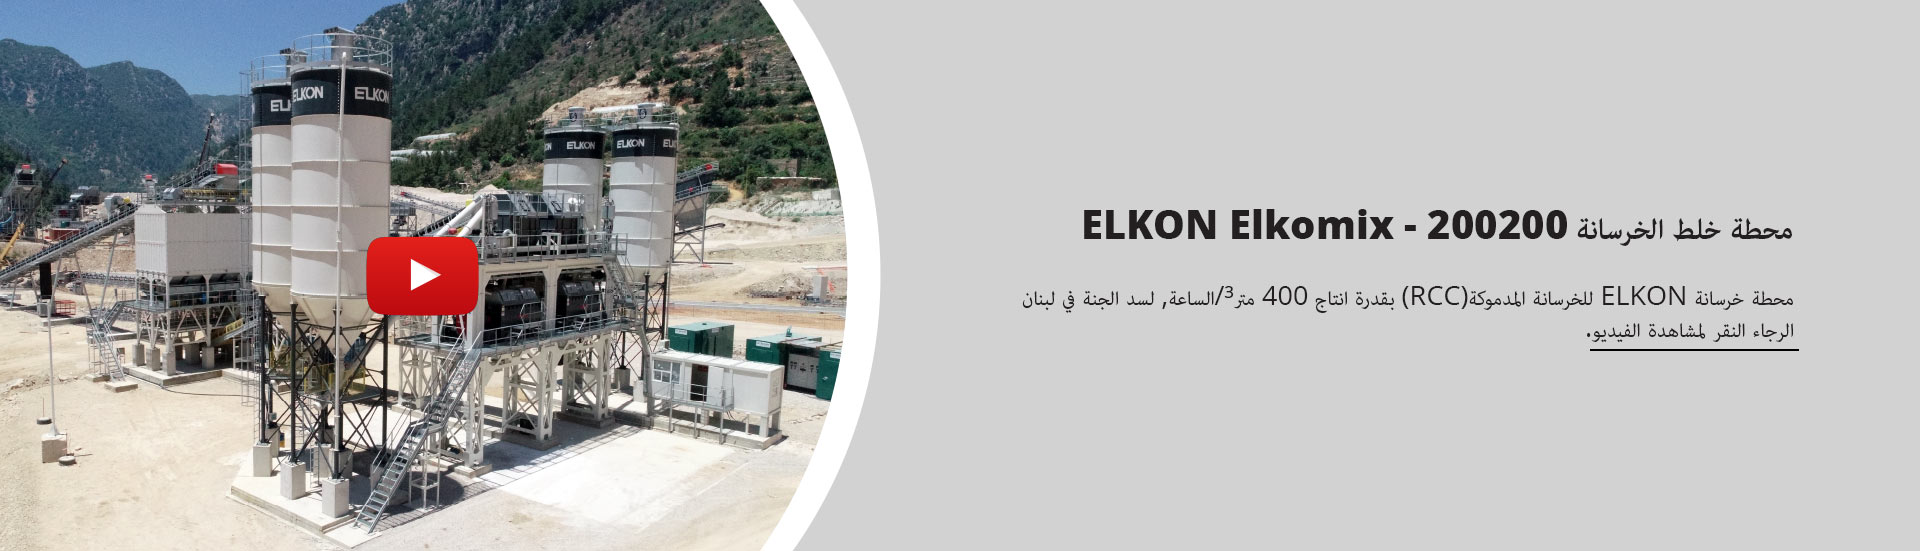 ELKON Elkomix - 200200 Concrete Batching Plant